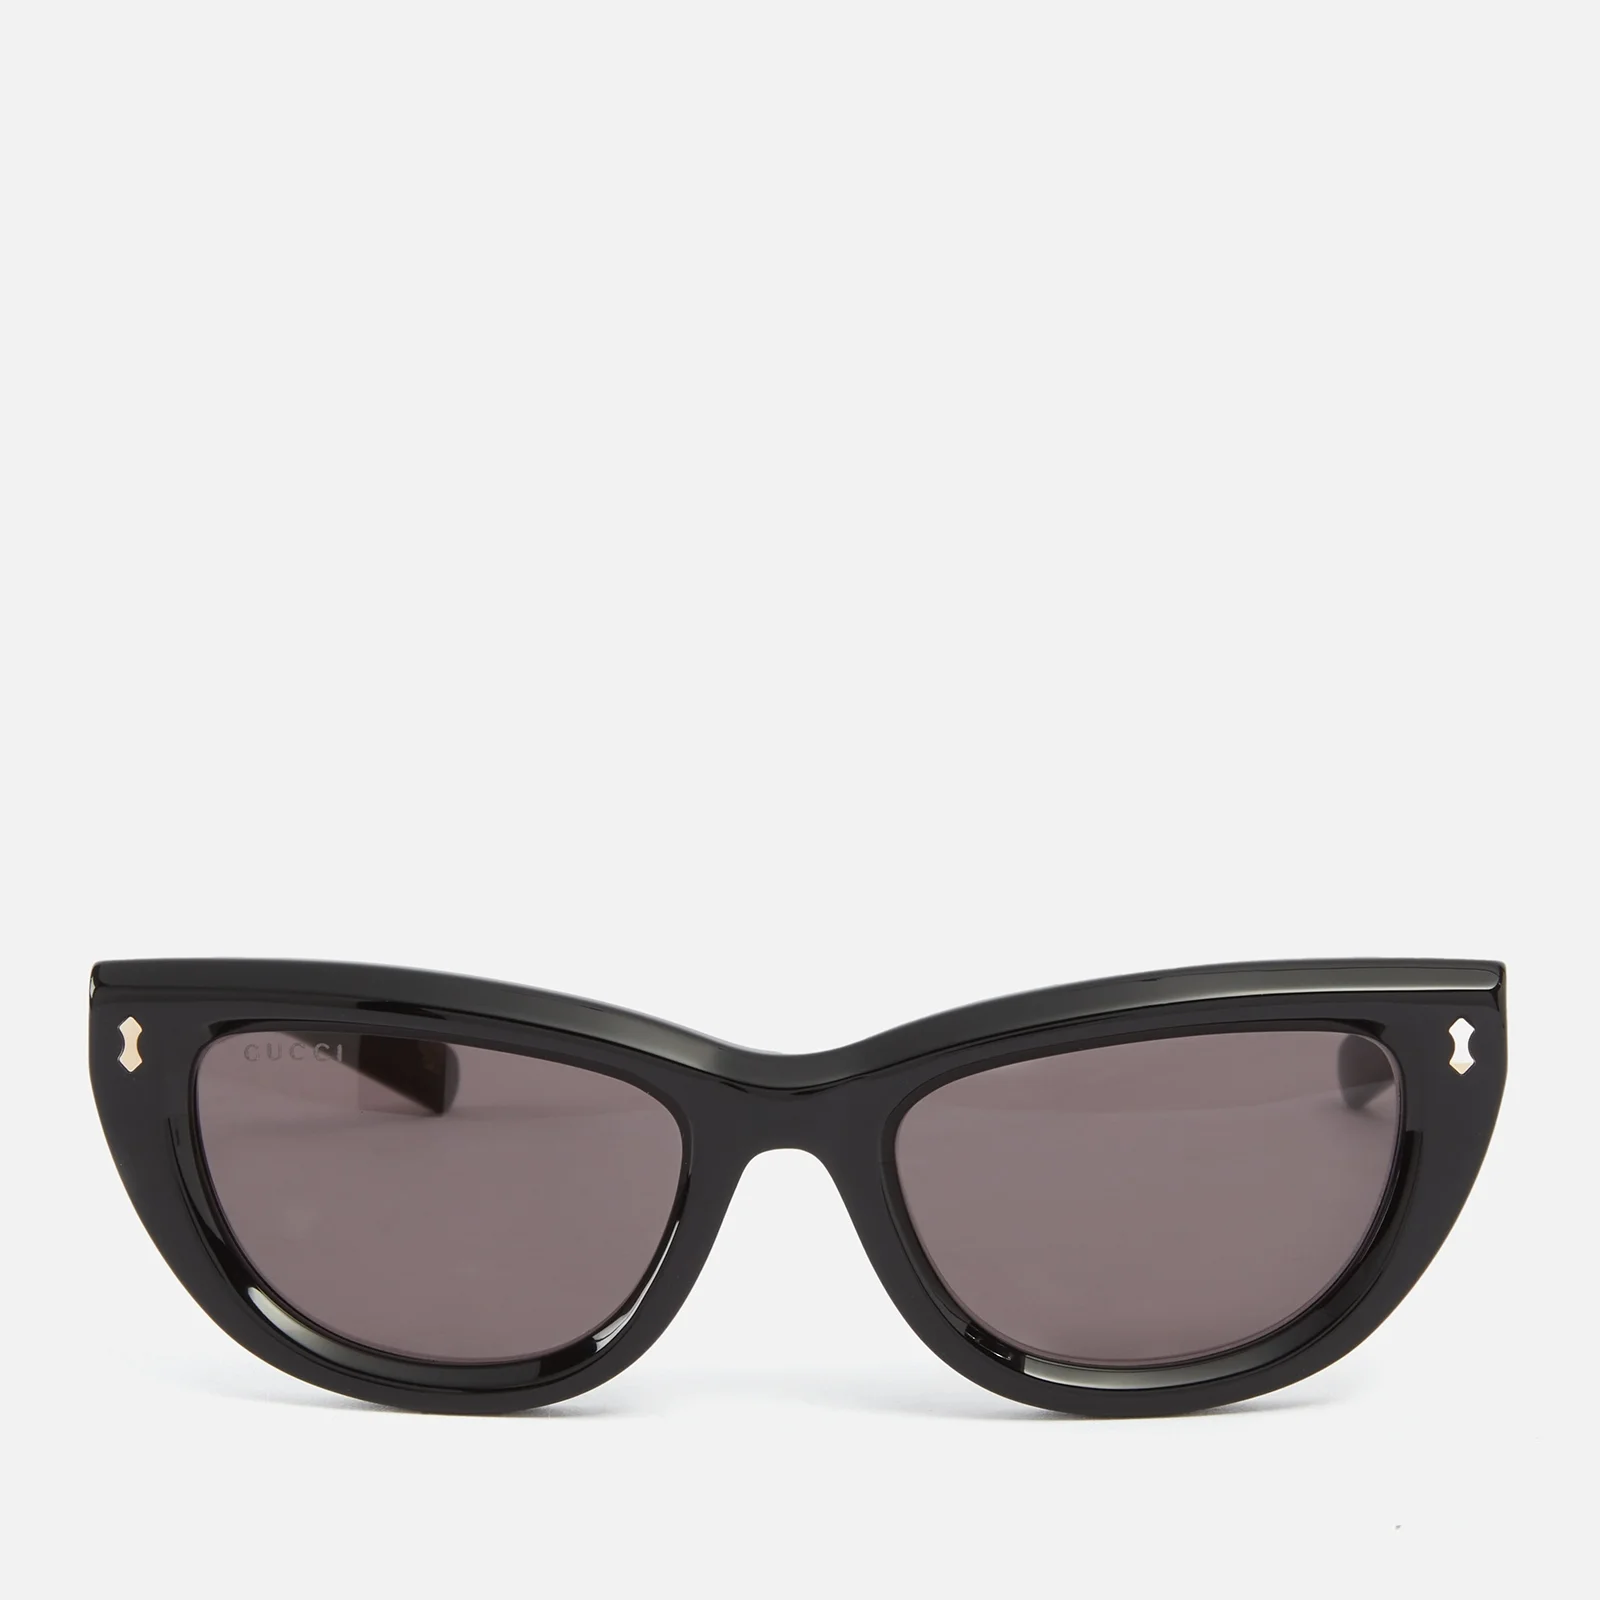 Gucci Acetate Cat-Eye Sunglasses Image 1